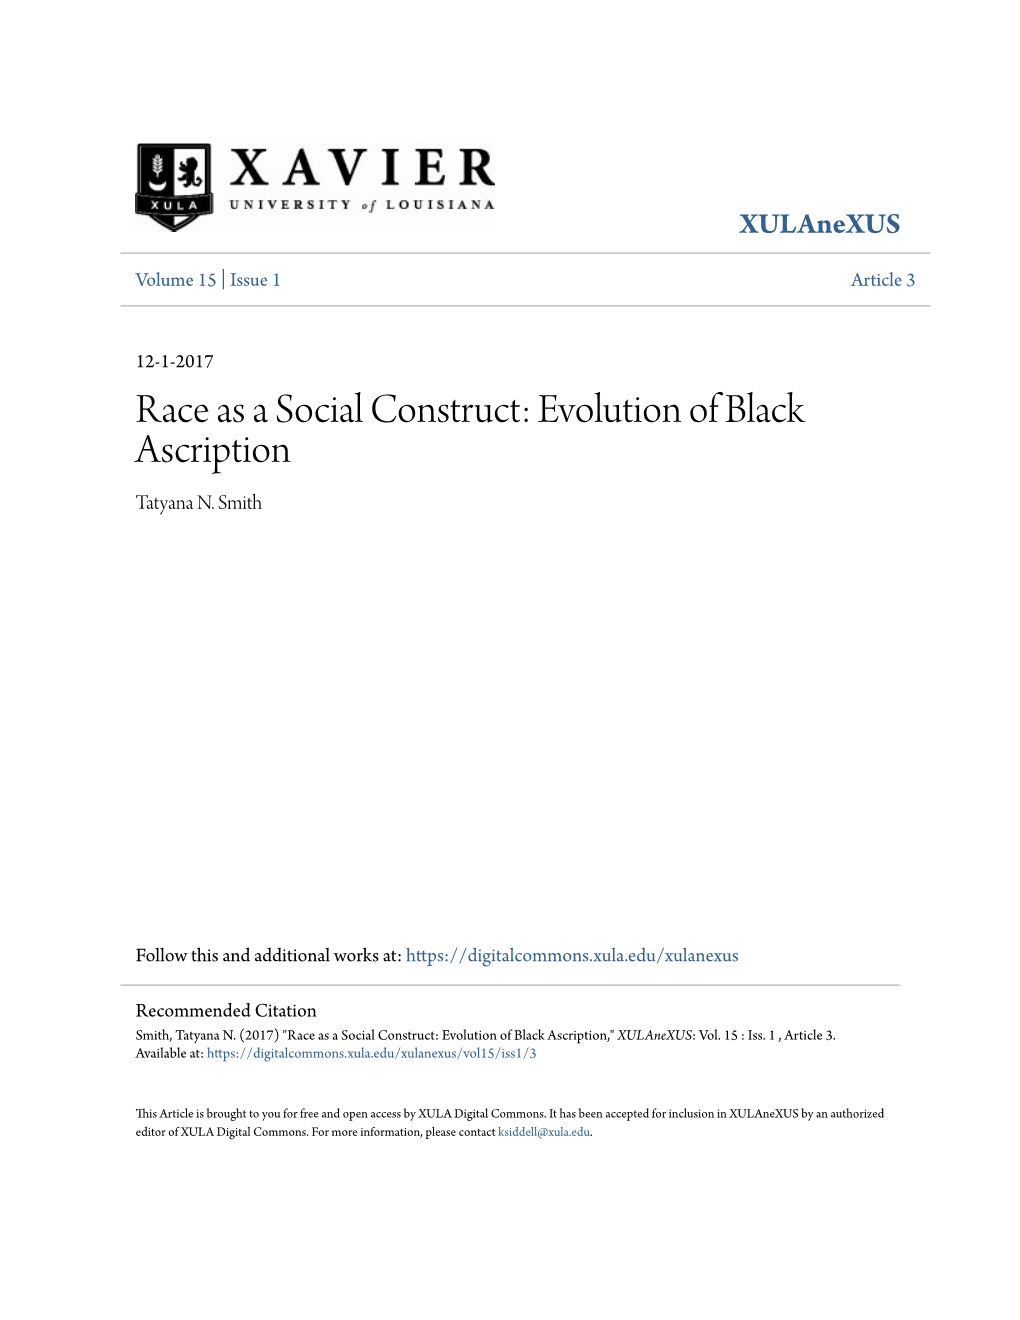 Race As a Social Construct: Evolution of Black Ascription Tatyana N